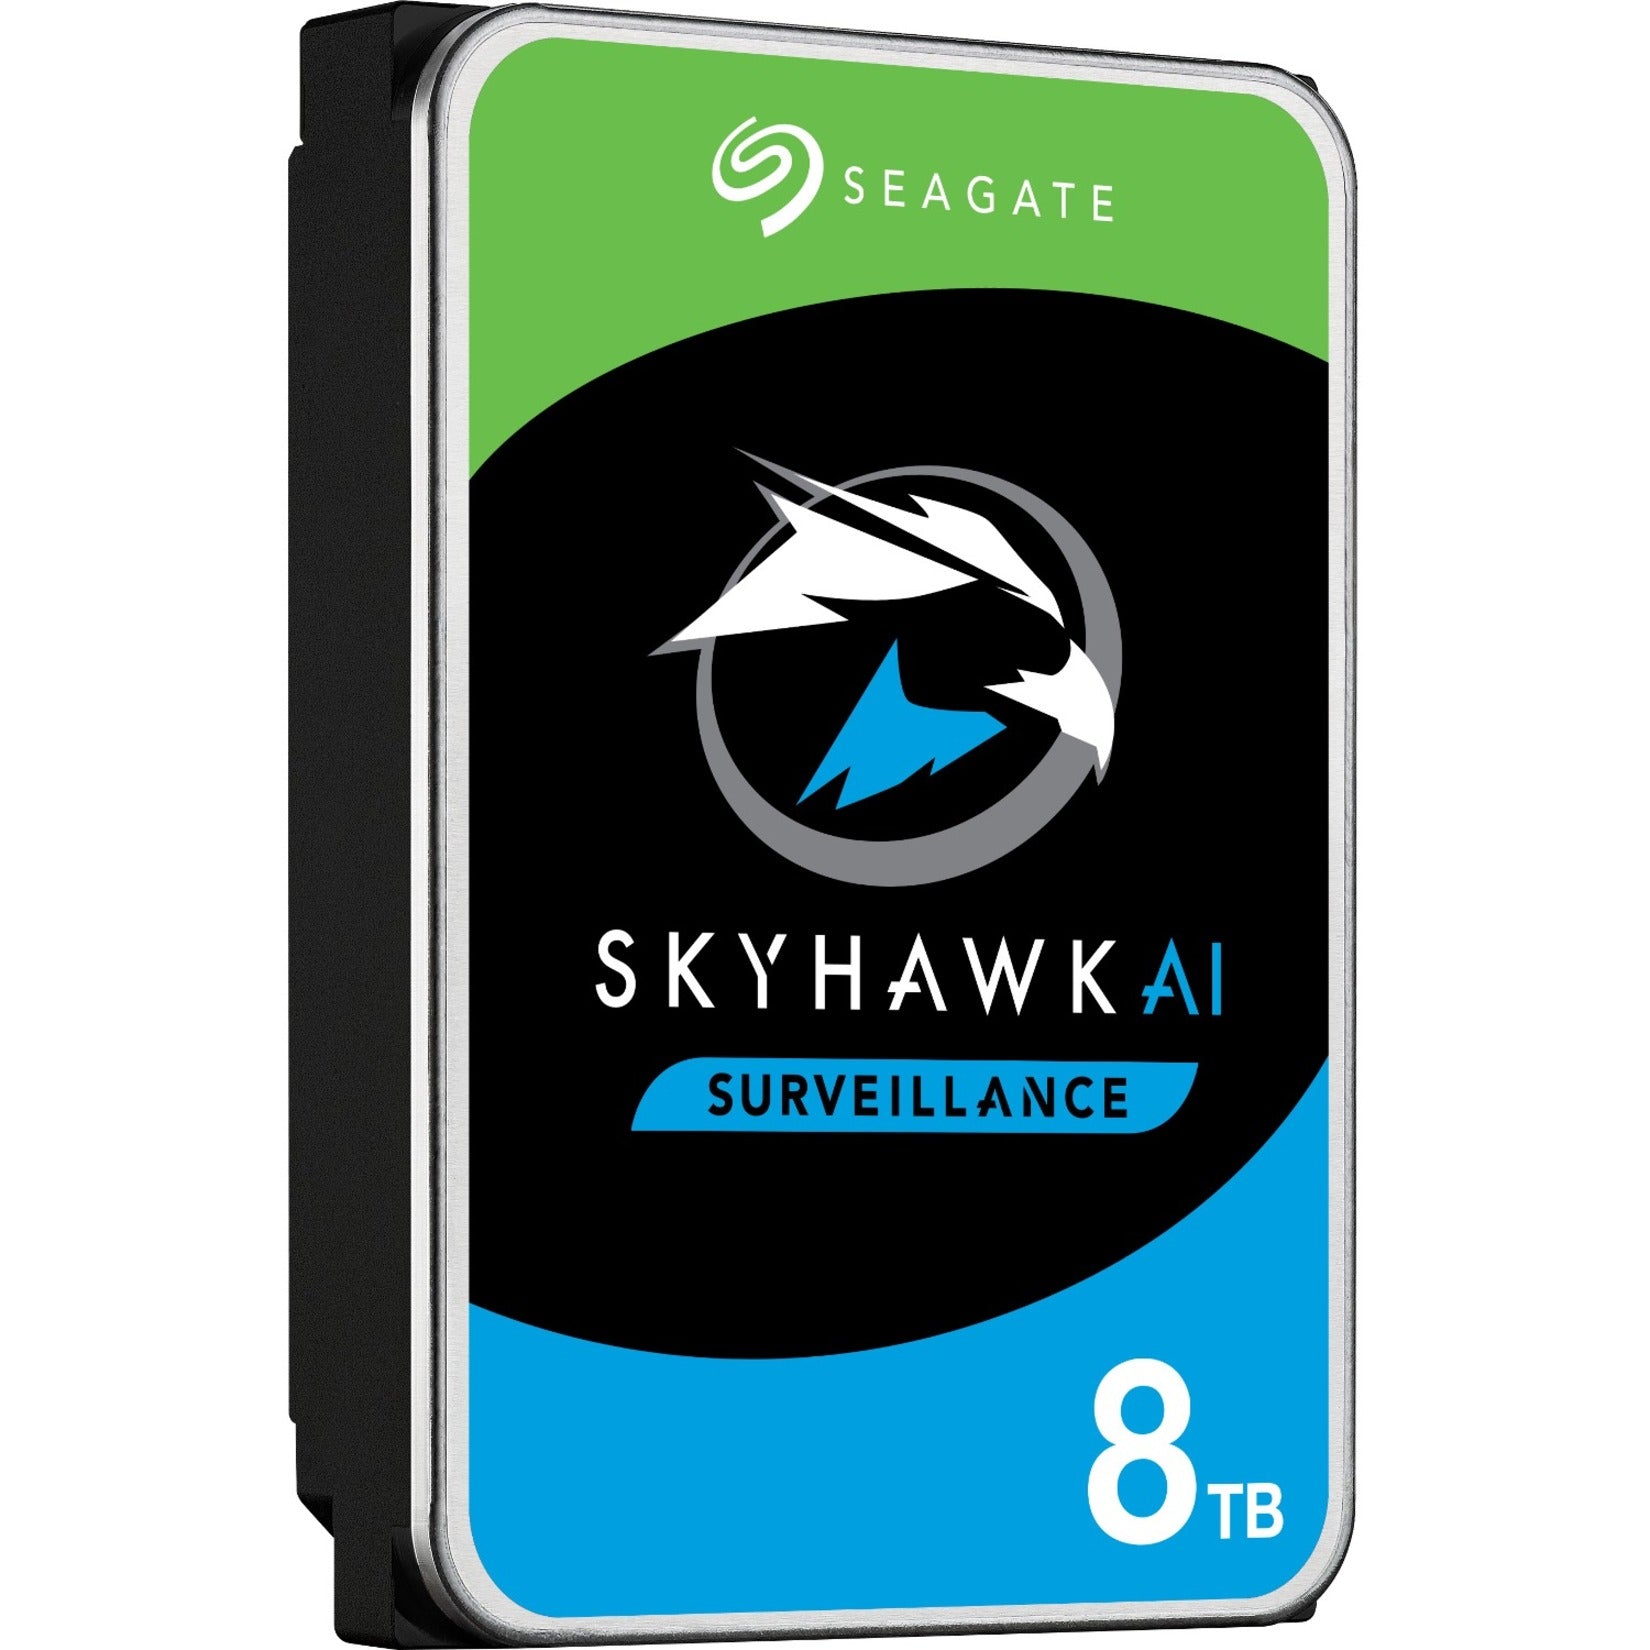 Seagate ST8000VE001 SkyHawk AI 8TB Disque Dur Stockage de Surveillance 24x7